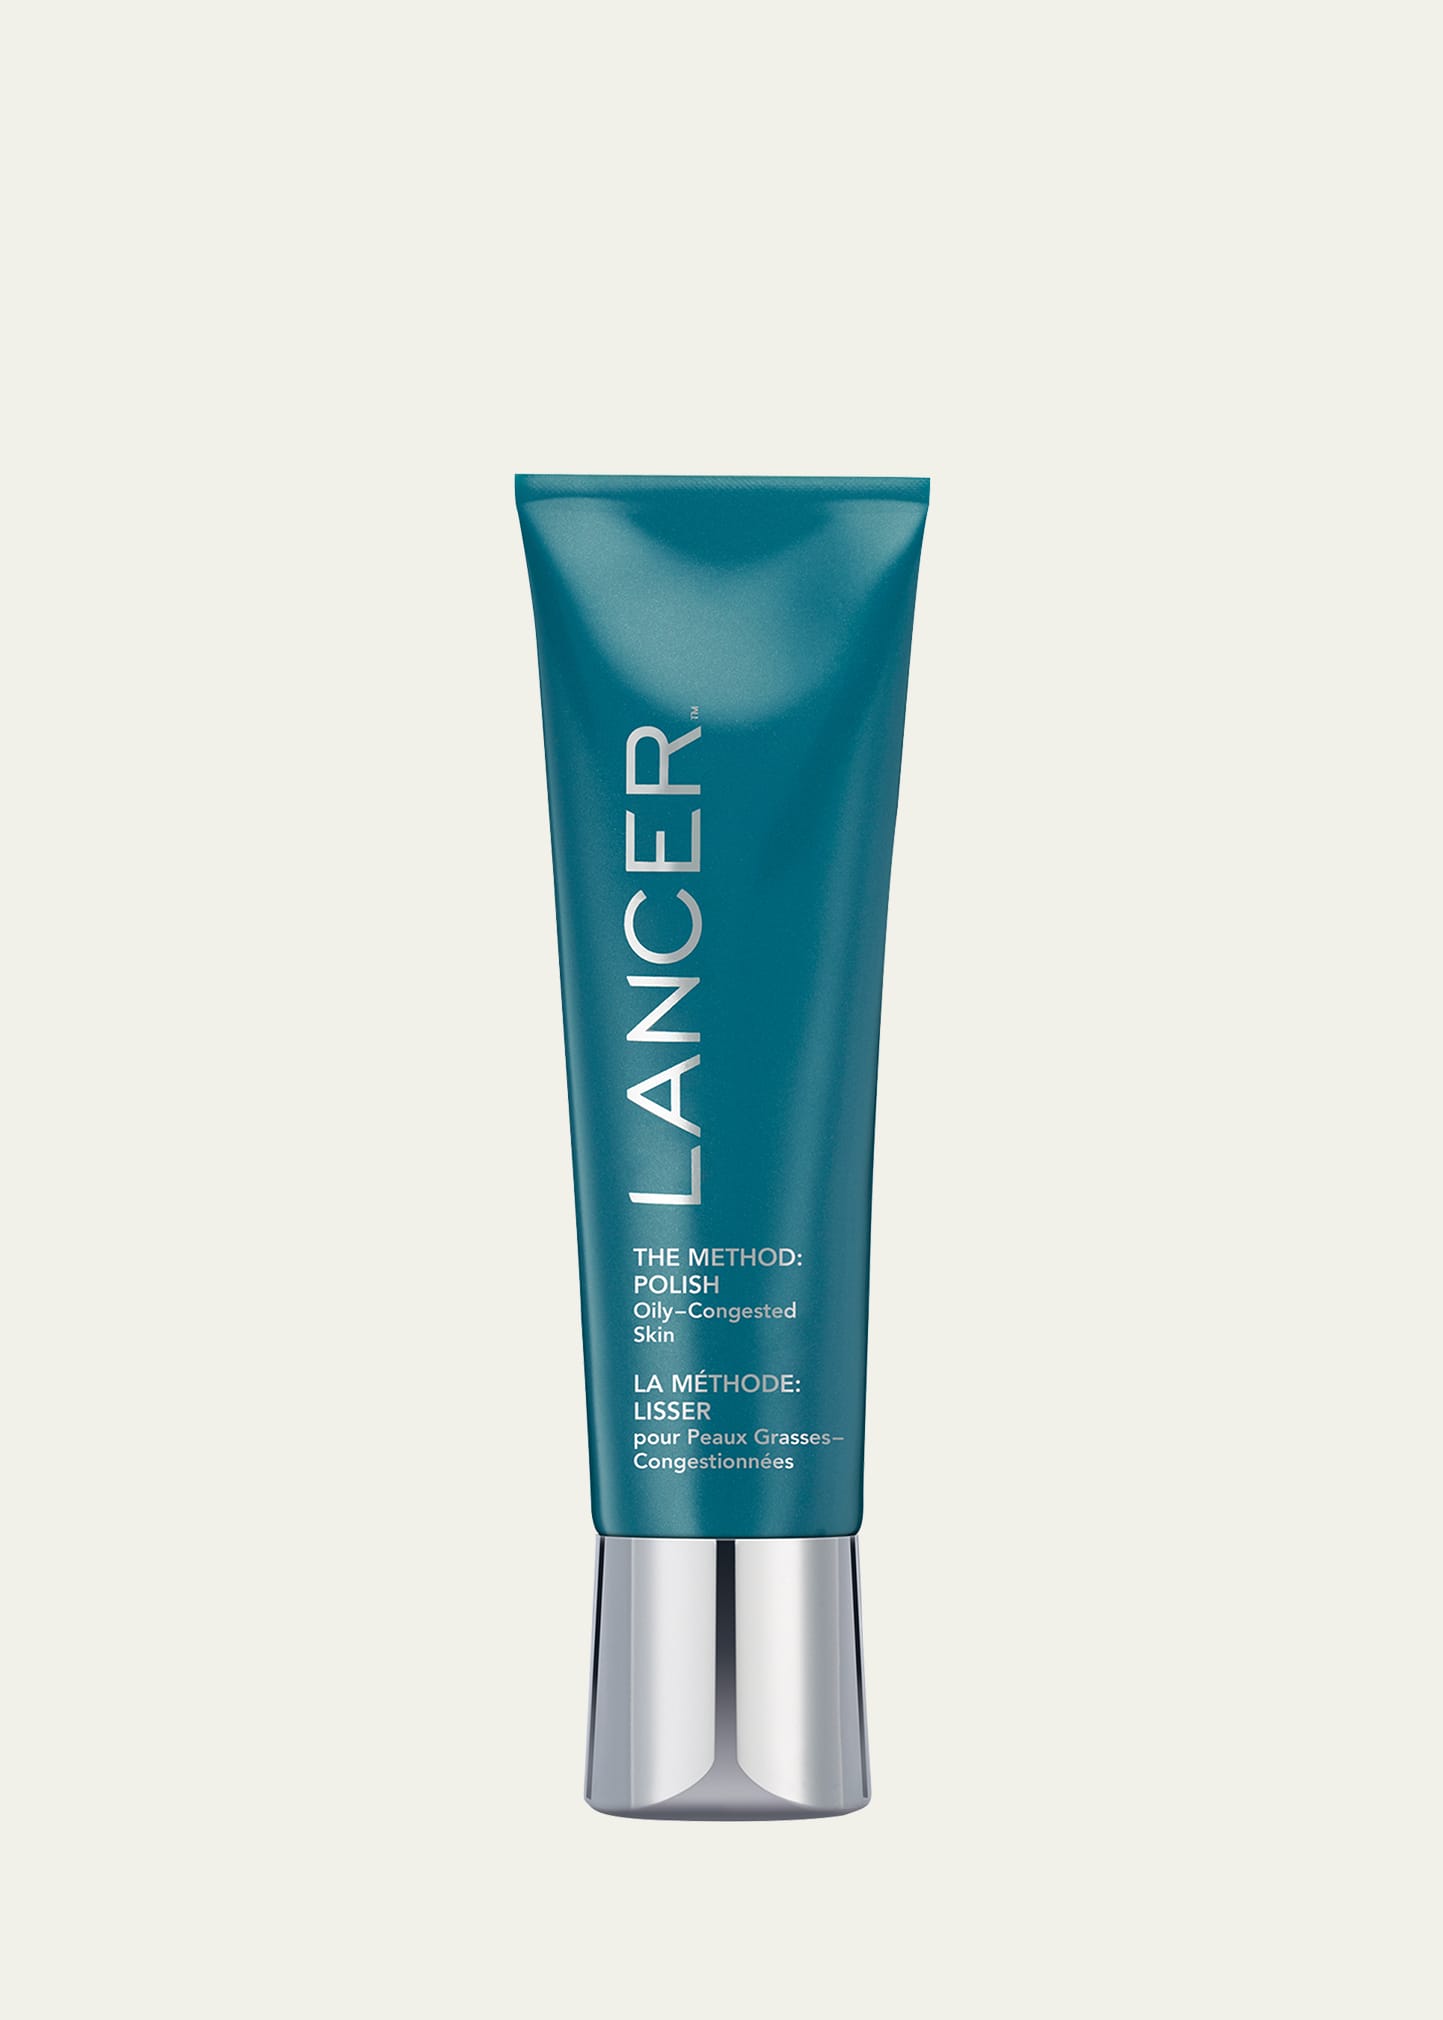 Lancer The Method: Polish Oily-Congested Skin, 4.2 oz.